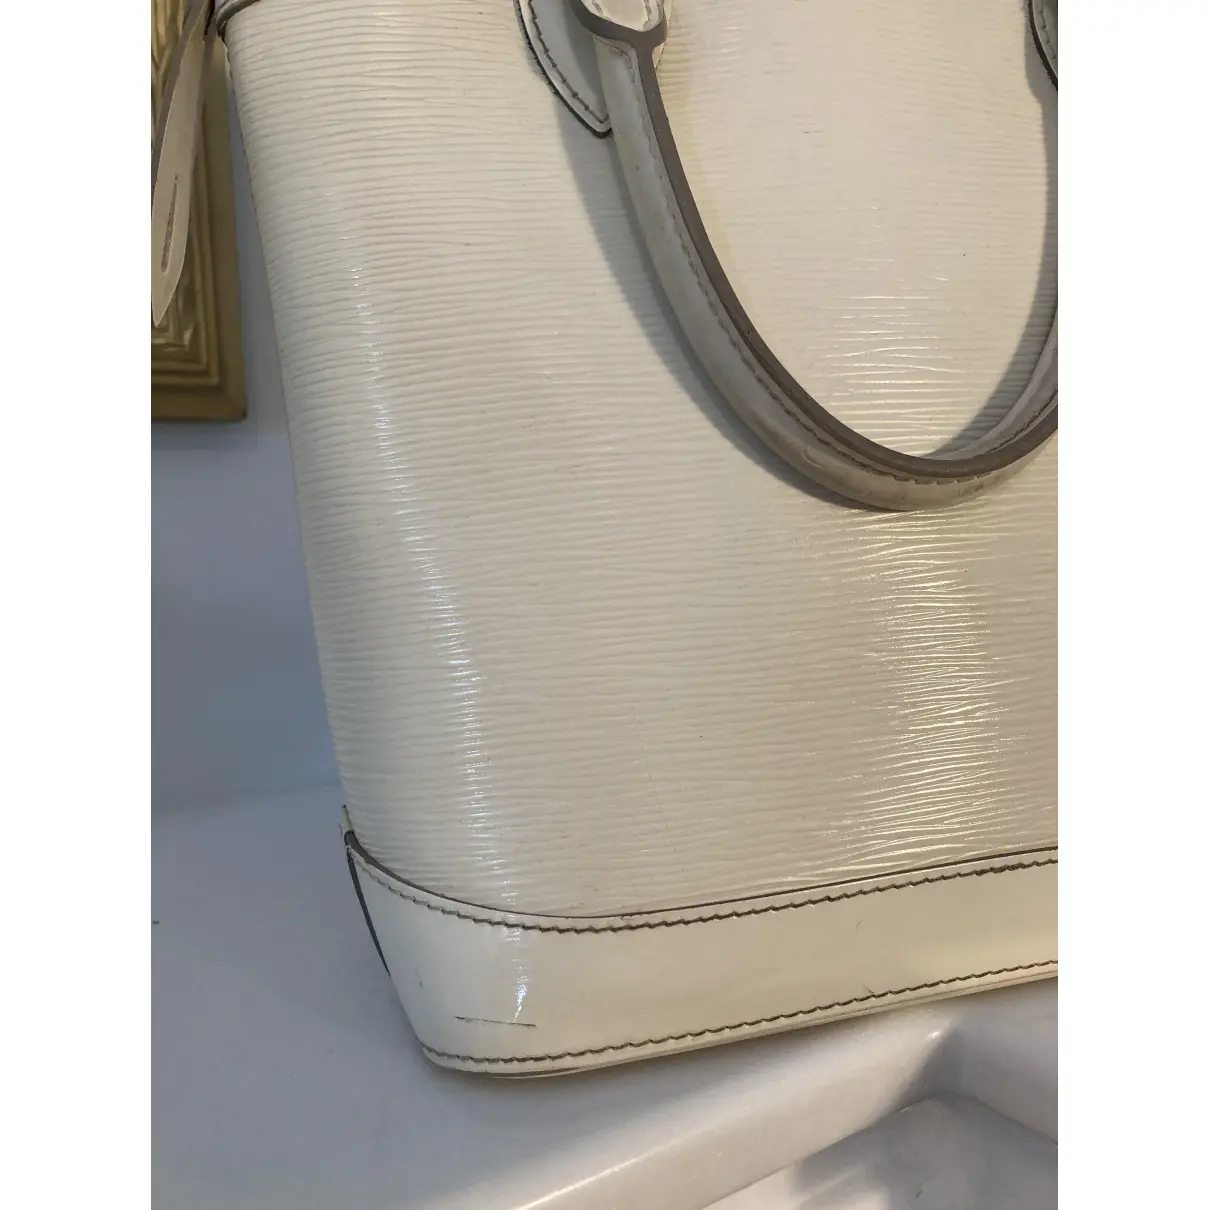 Buy Louis Vuitton Lockit Vertical leather handbag online